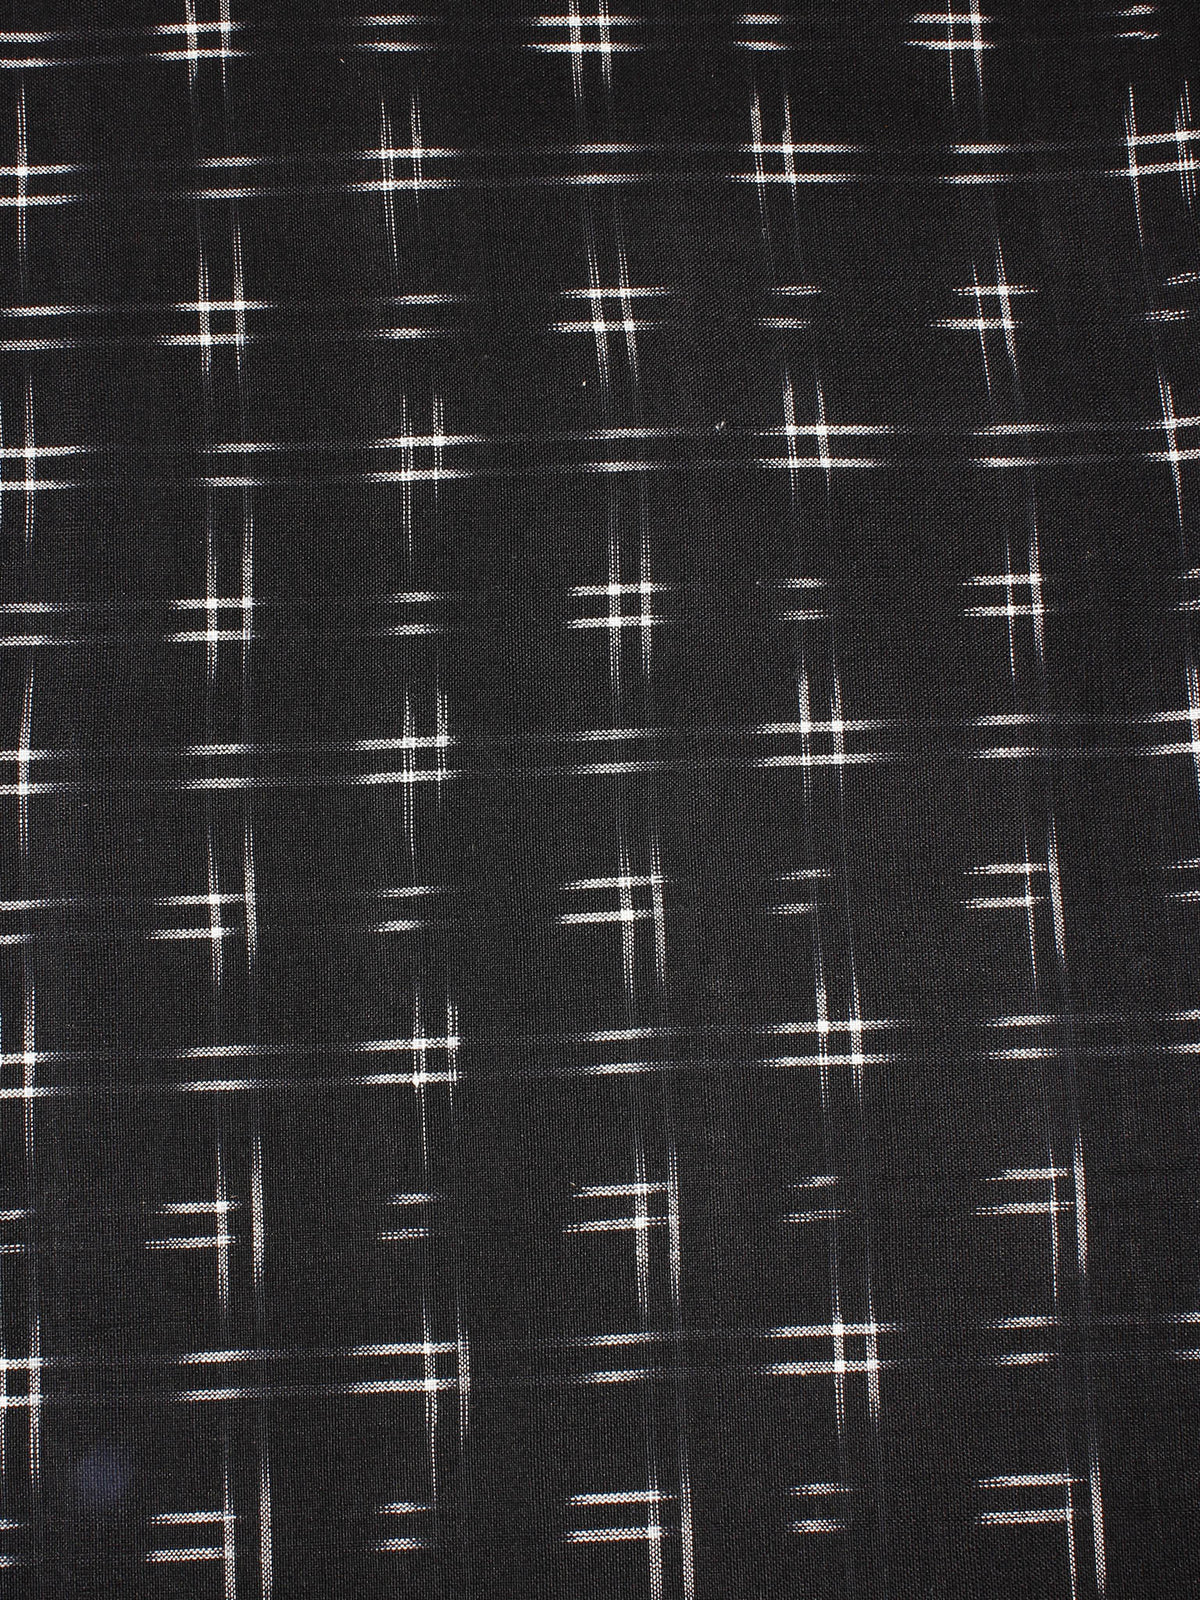 Black White Pochampally Hand Weaved Double Ikat Fabric Per Meter - F0916666